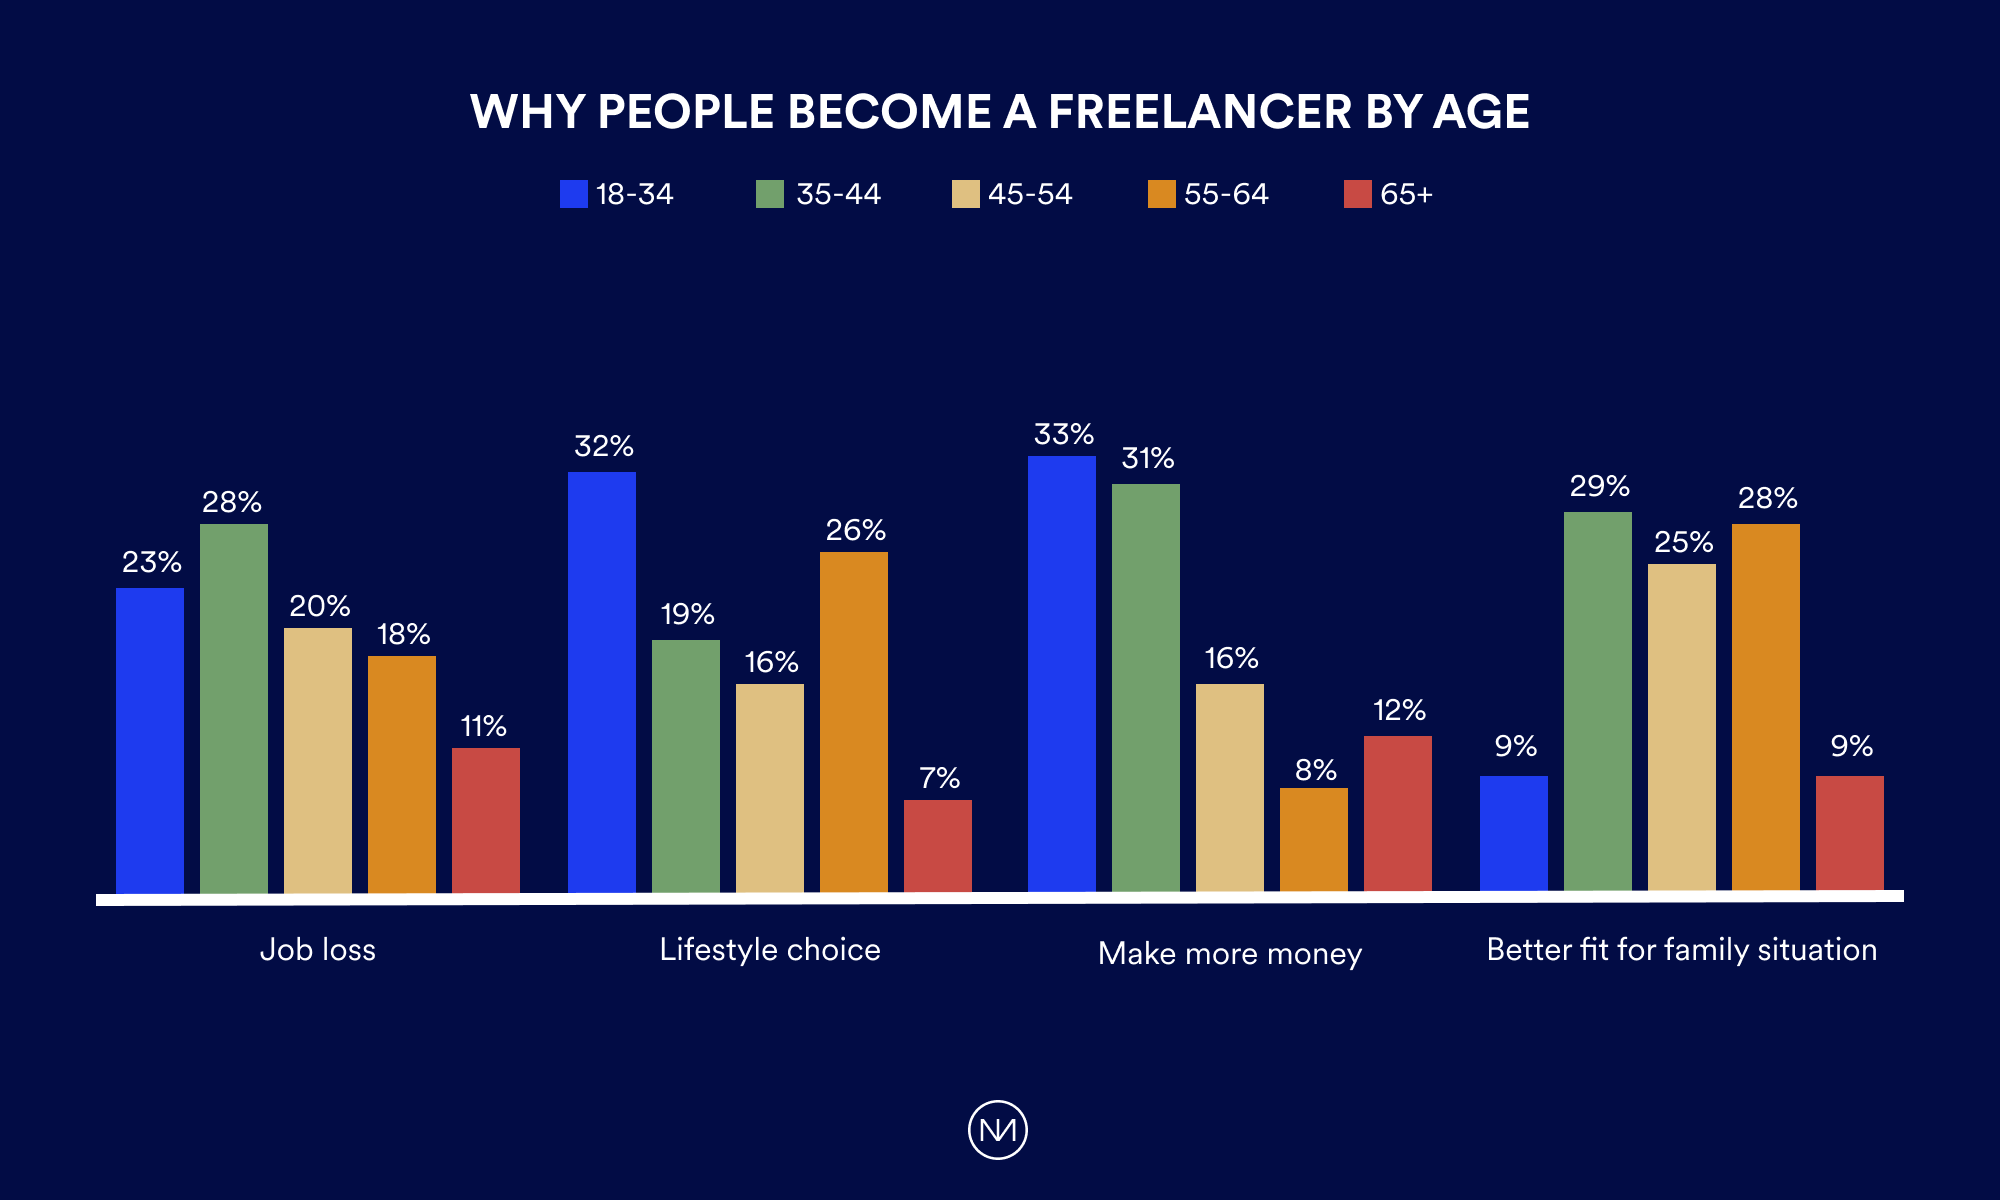 U.S. freelancer - motivation to go freelance by age